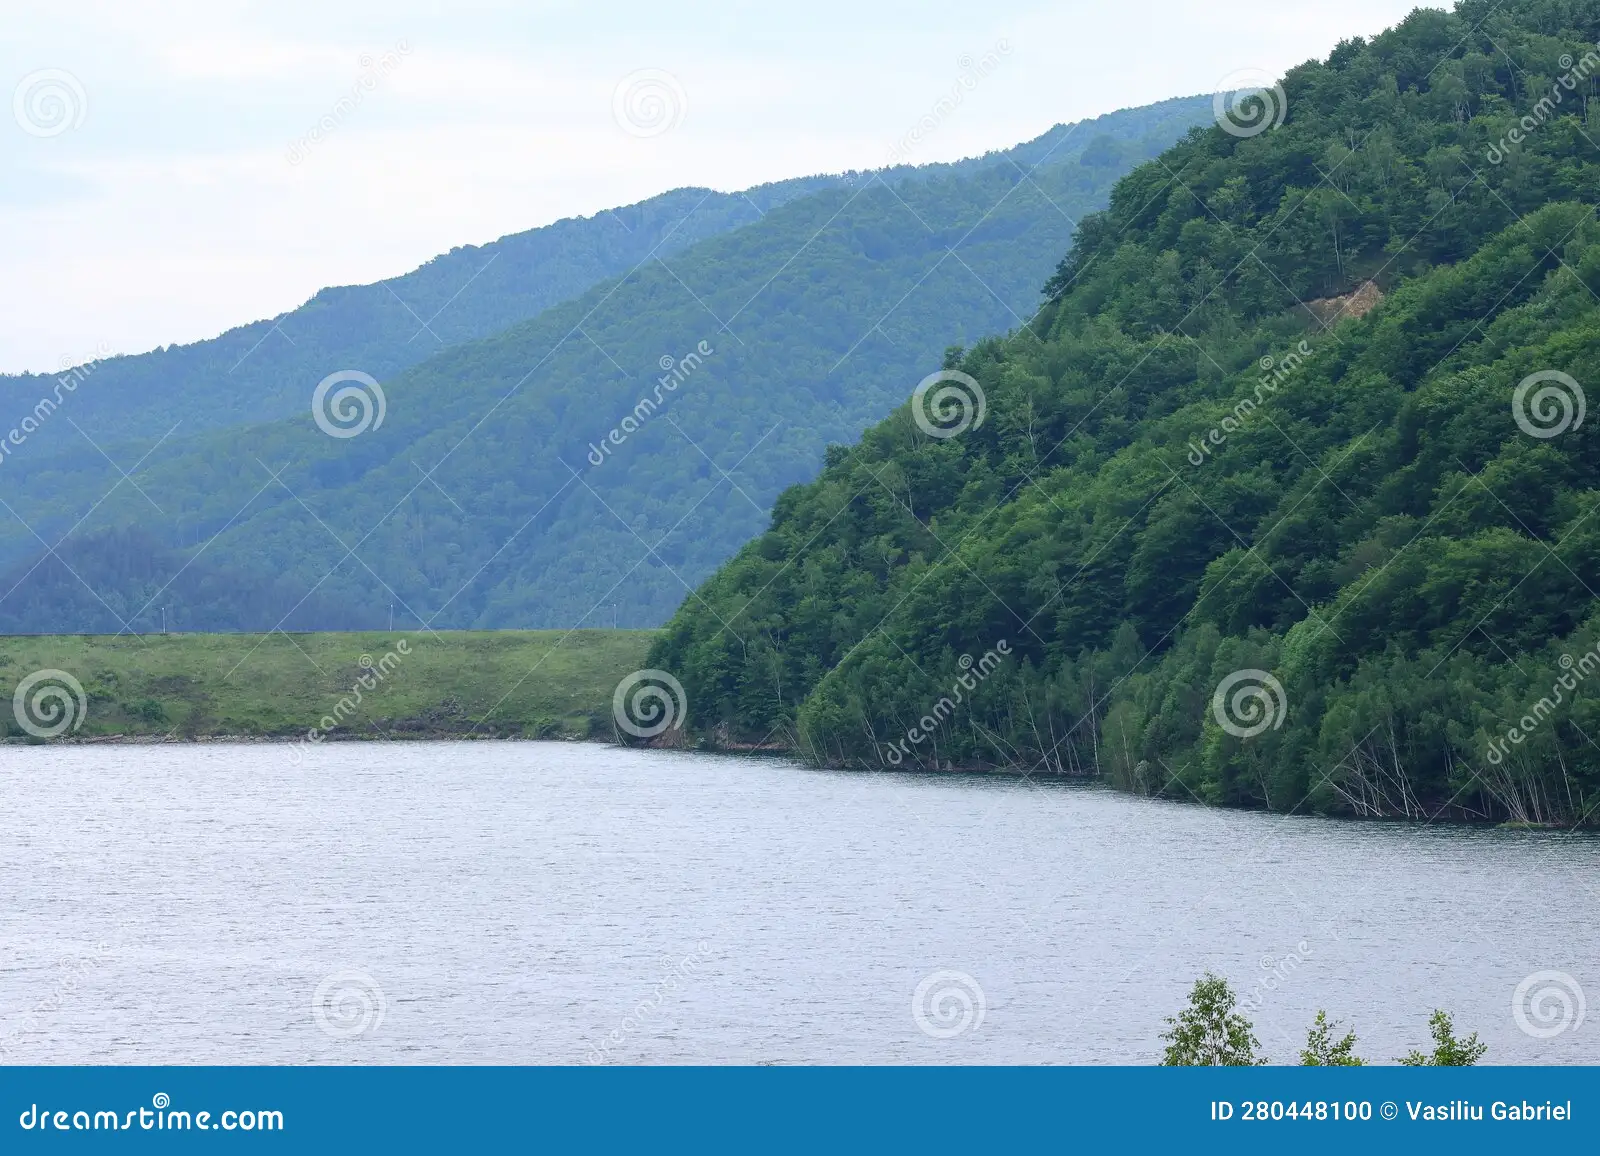 The Siriu Dam is an earthen dam on the Buzau River